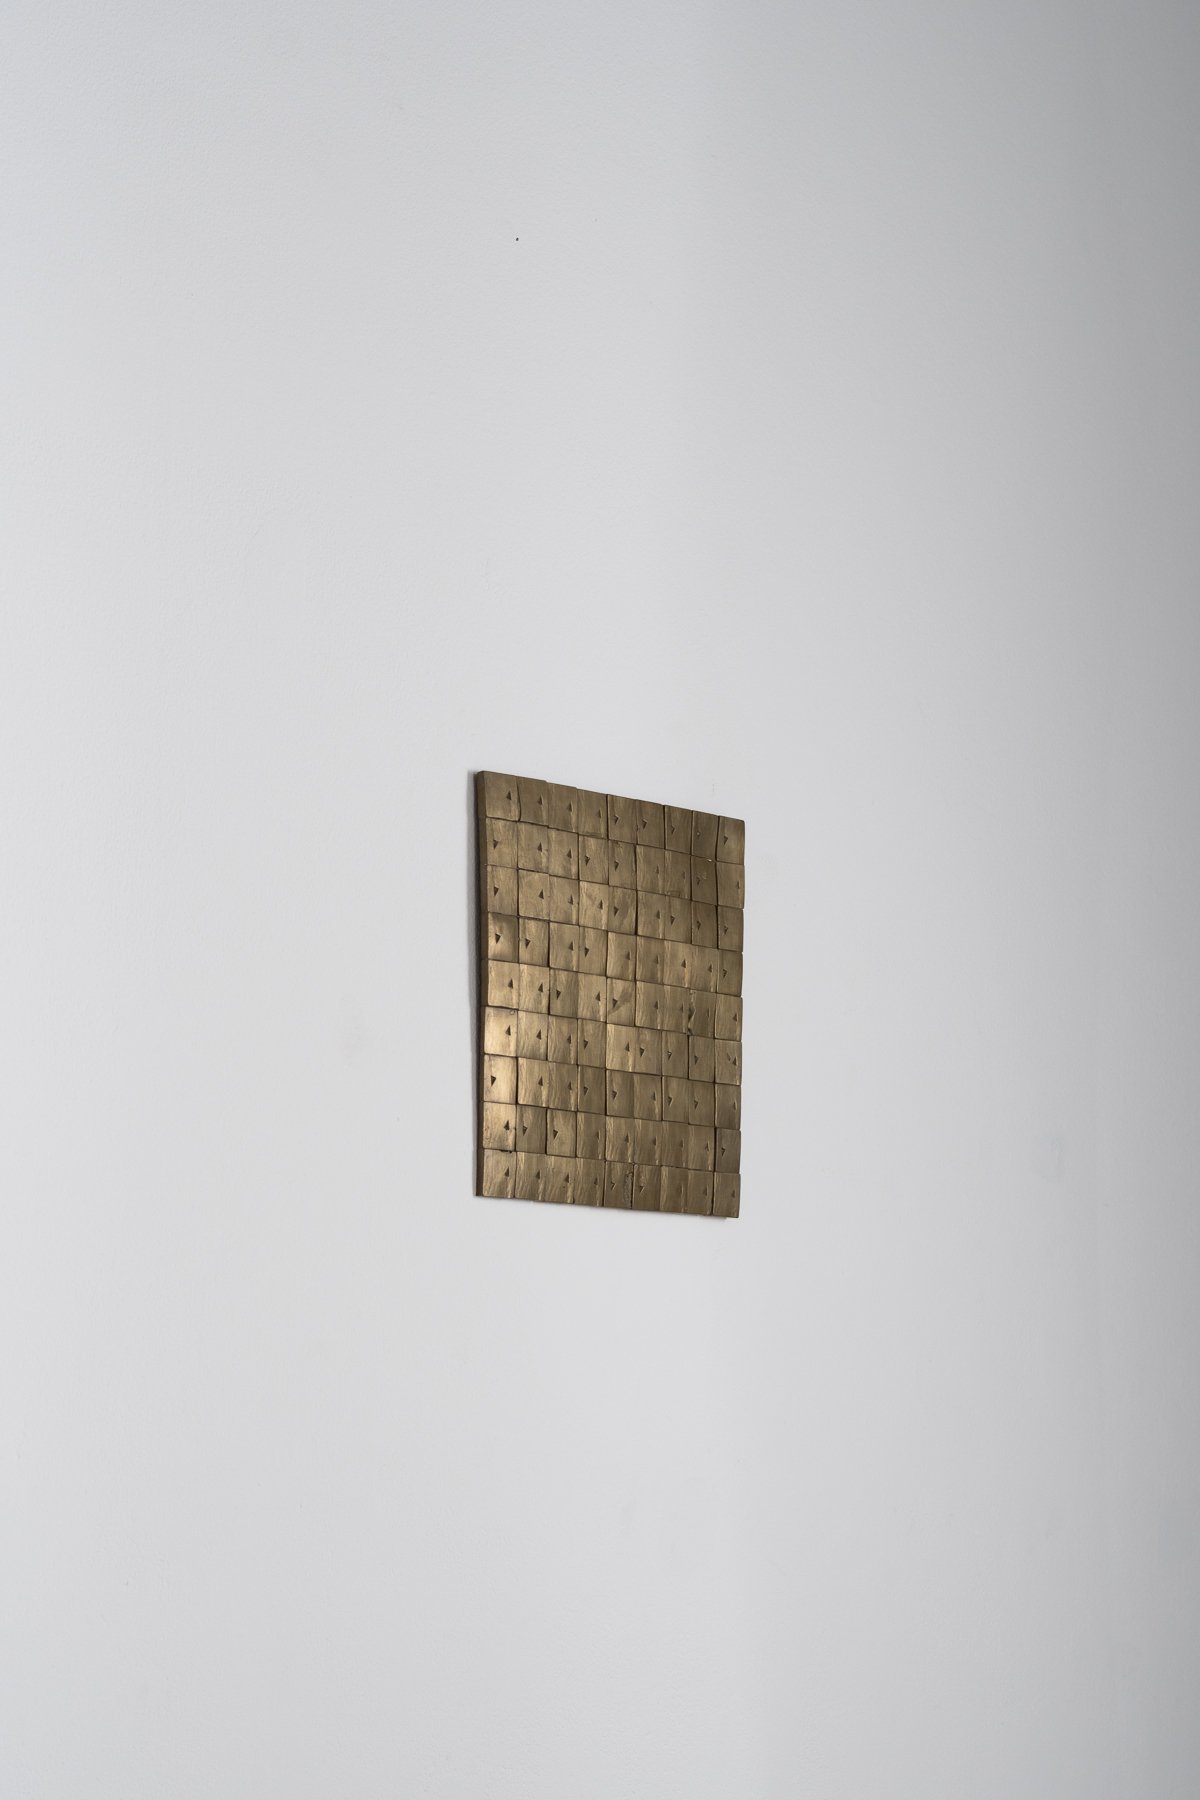   Untitled  2022 Urethane, bronze 18 x 18 x 1/2 inches  